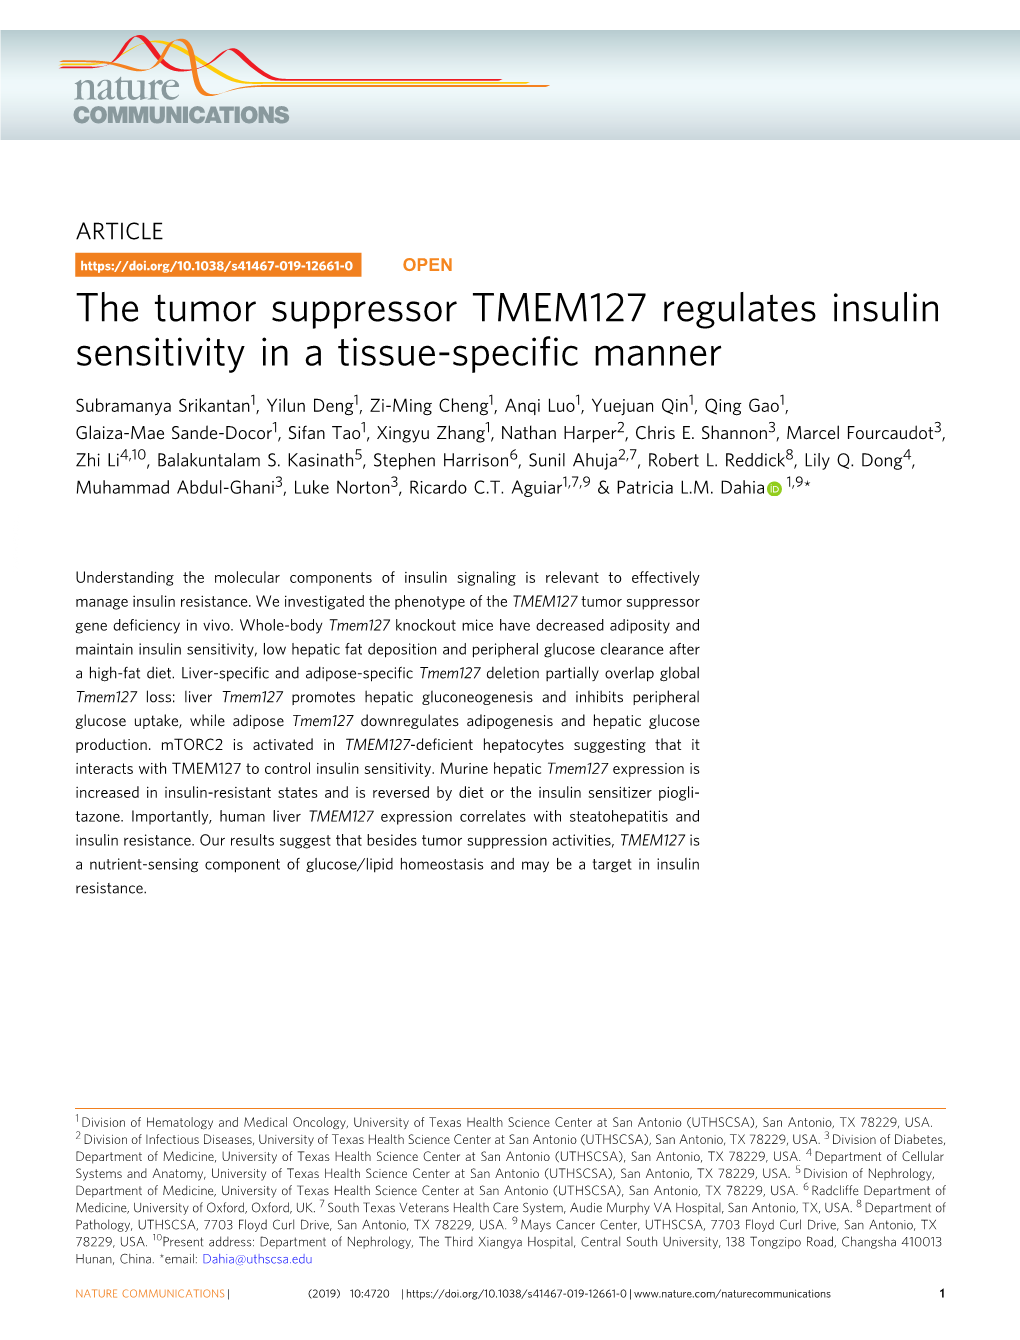 The Tumor Suppressor TMEM127 Regulates Insulin Sensitivity in a Tissue-Specific Manner